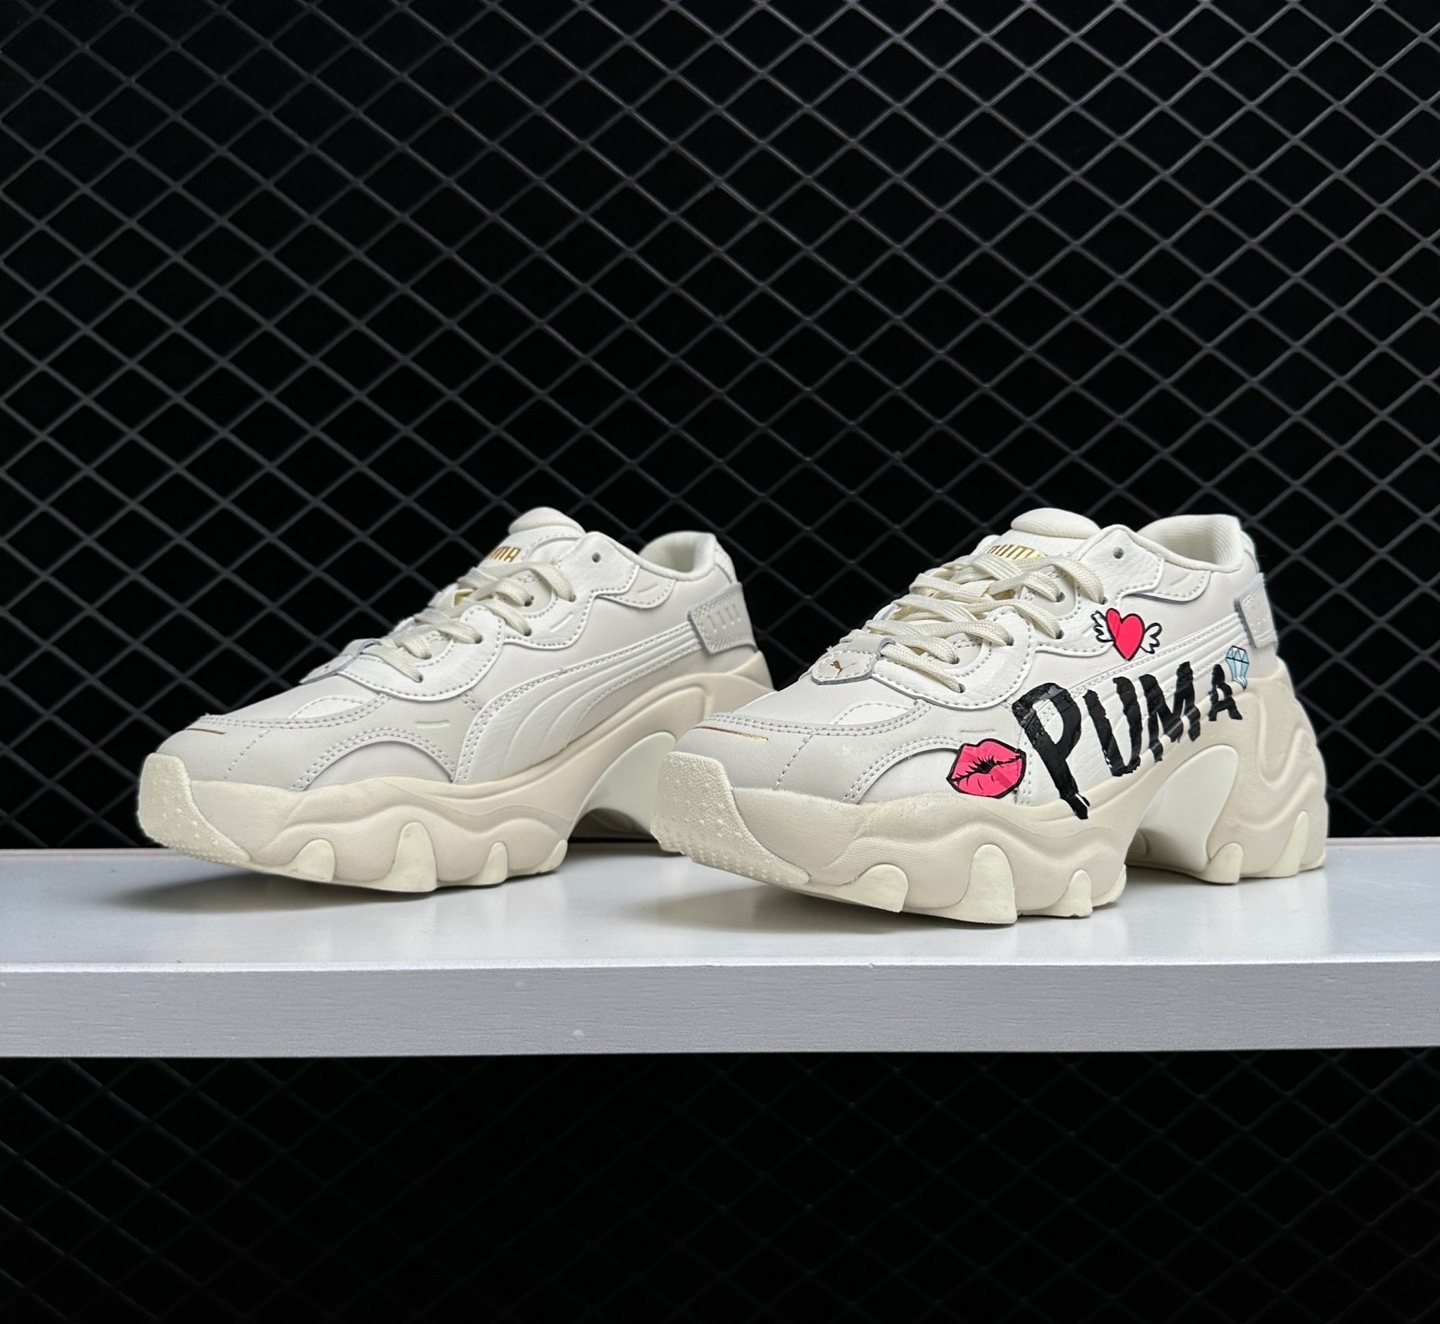 PUMA Pulsar Wedge 'White Pink' 392709-01 - Stylish Women's Sneakers